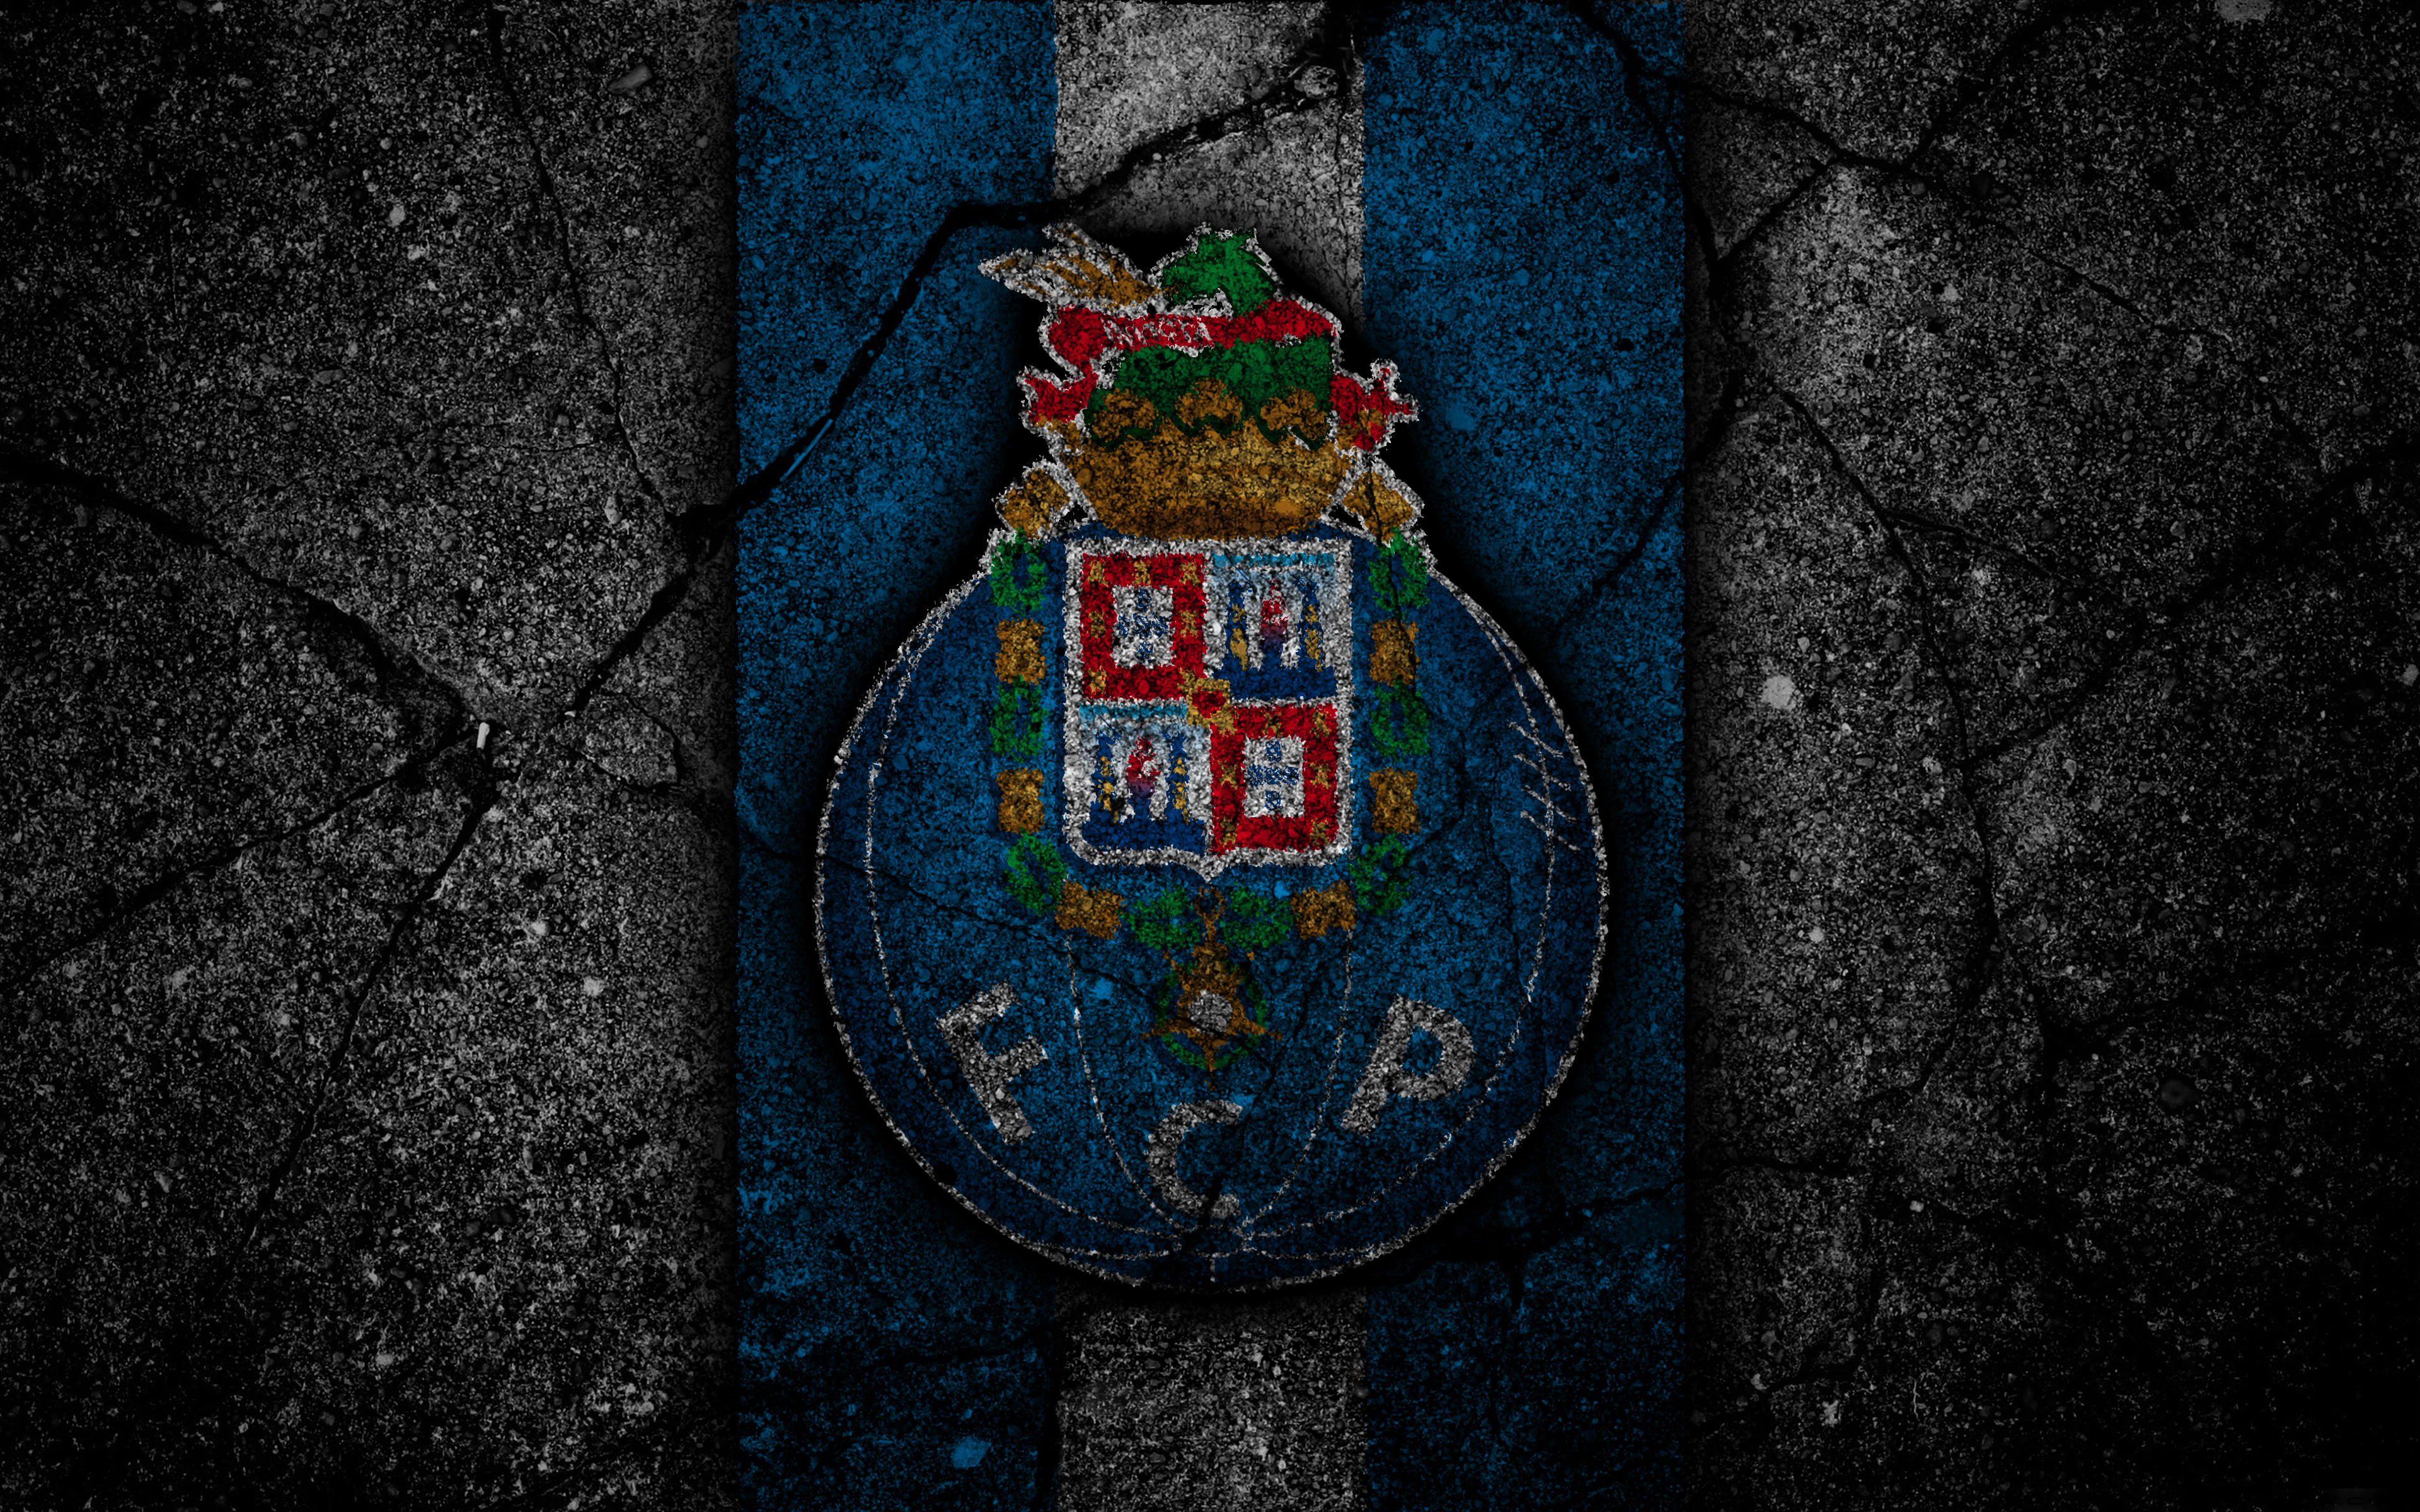 Fc Porto 4k Ultra Hd Wallpaper Background Image 3840x2400 Id 989976 Wallpaper Abyss